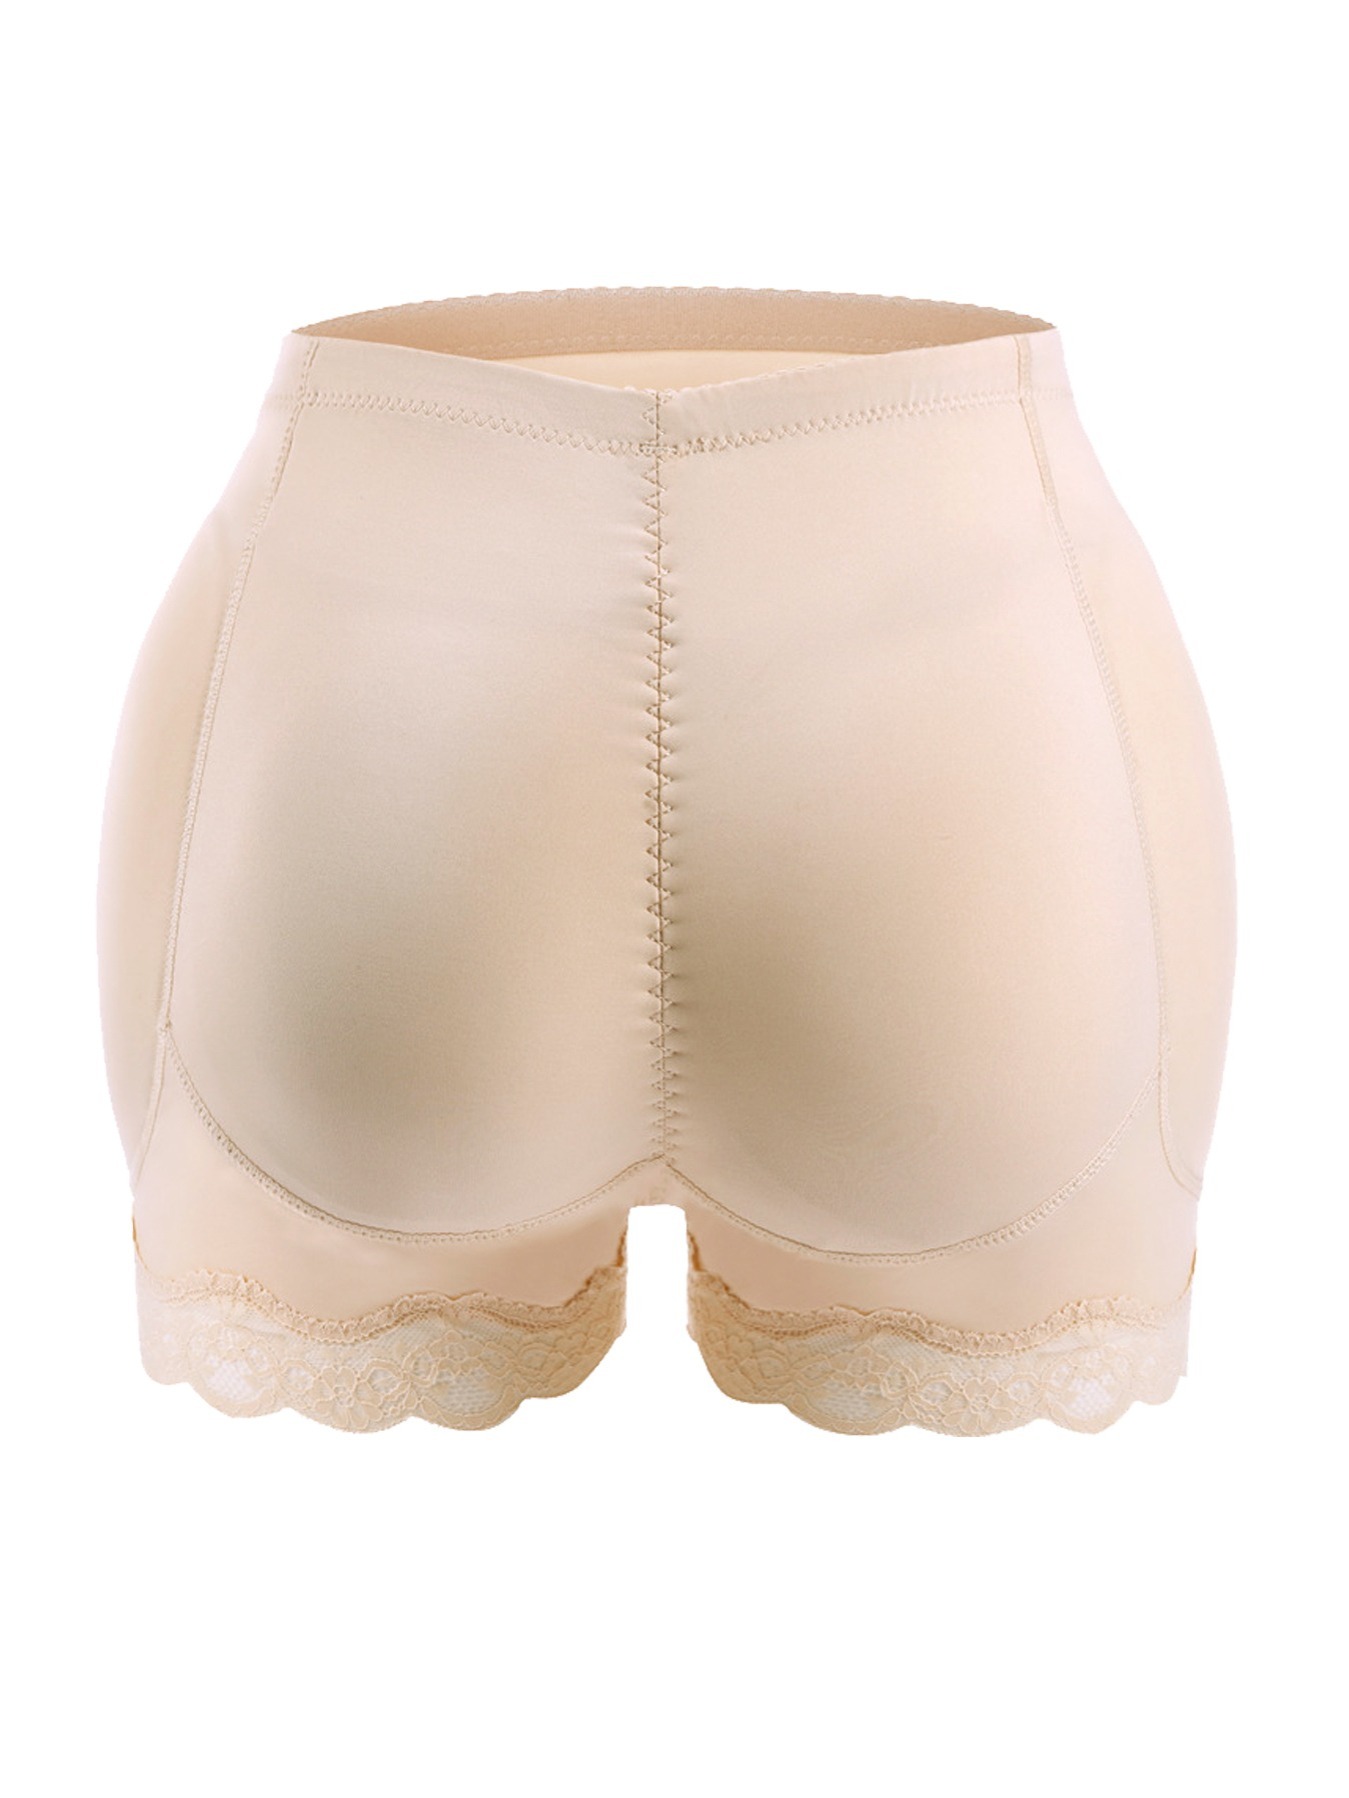 LADY SLIM BODY Shaper Padded Pants Hip Enhancer Underwear Booty Push Up  Boyshort £10.79 - PicClick UK